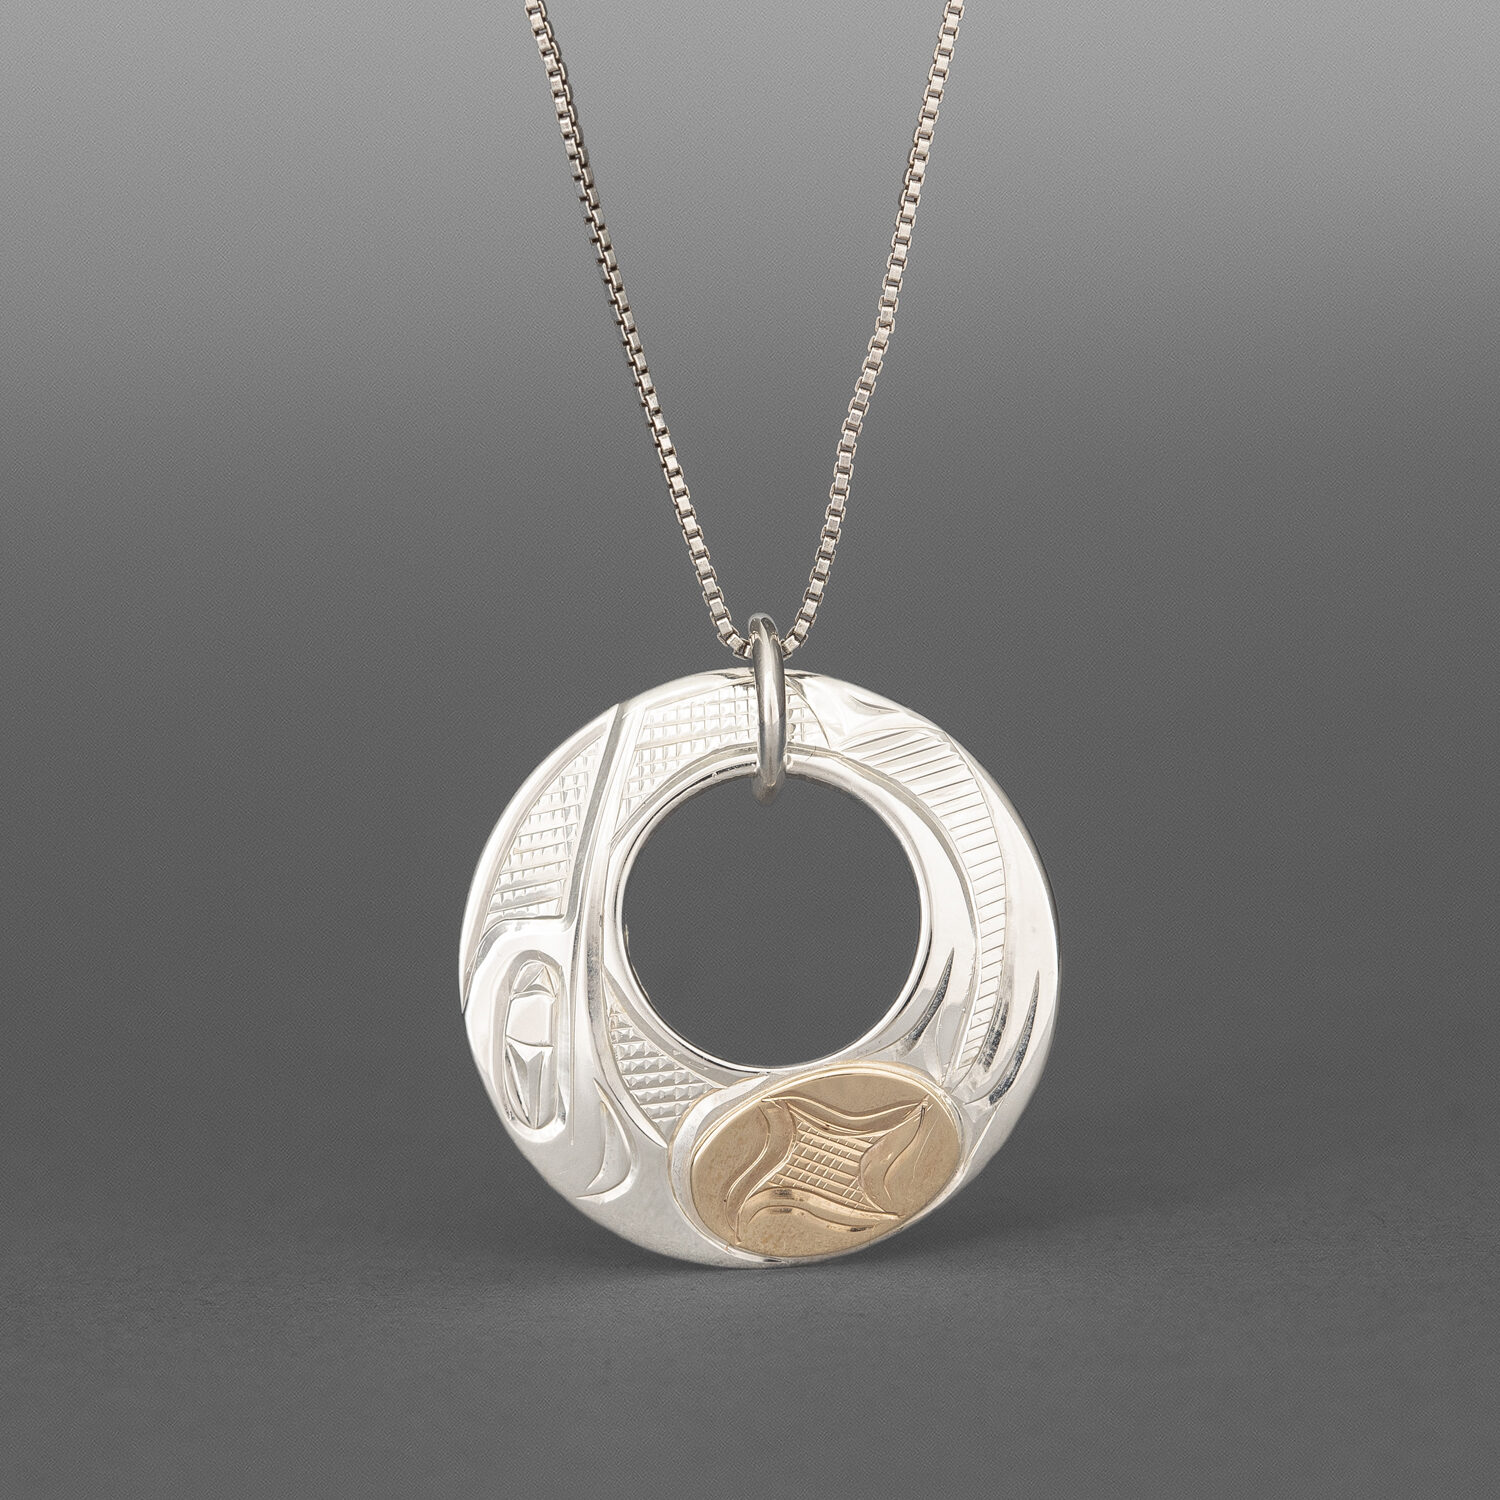 Hummingbird Pendant
Corrine Hunt
Kwakwaka'wakw/Tlingit
Sterling silver, 14k gold
1" dia.
$295